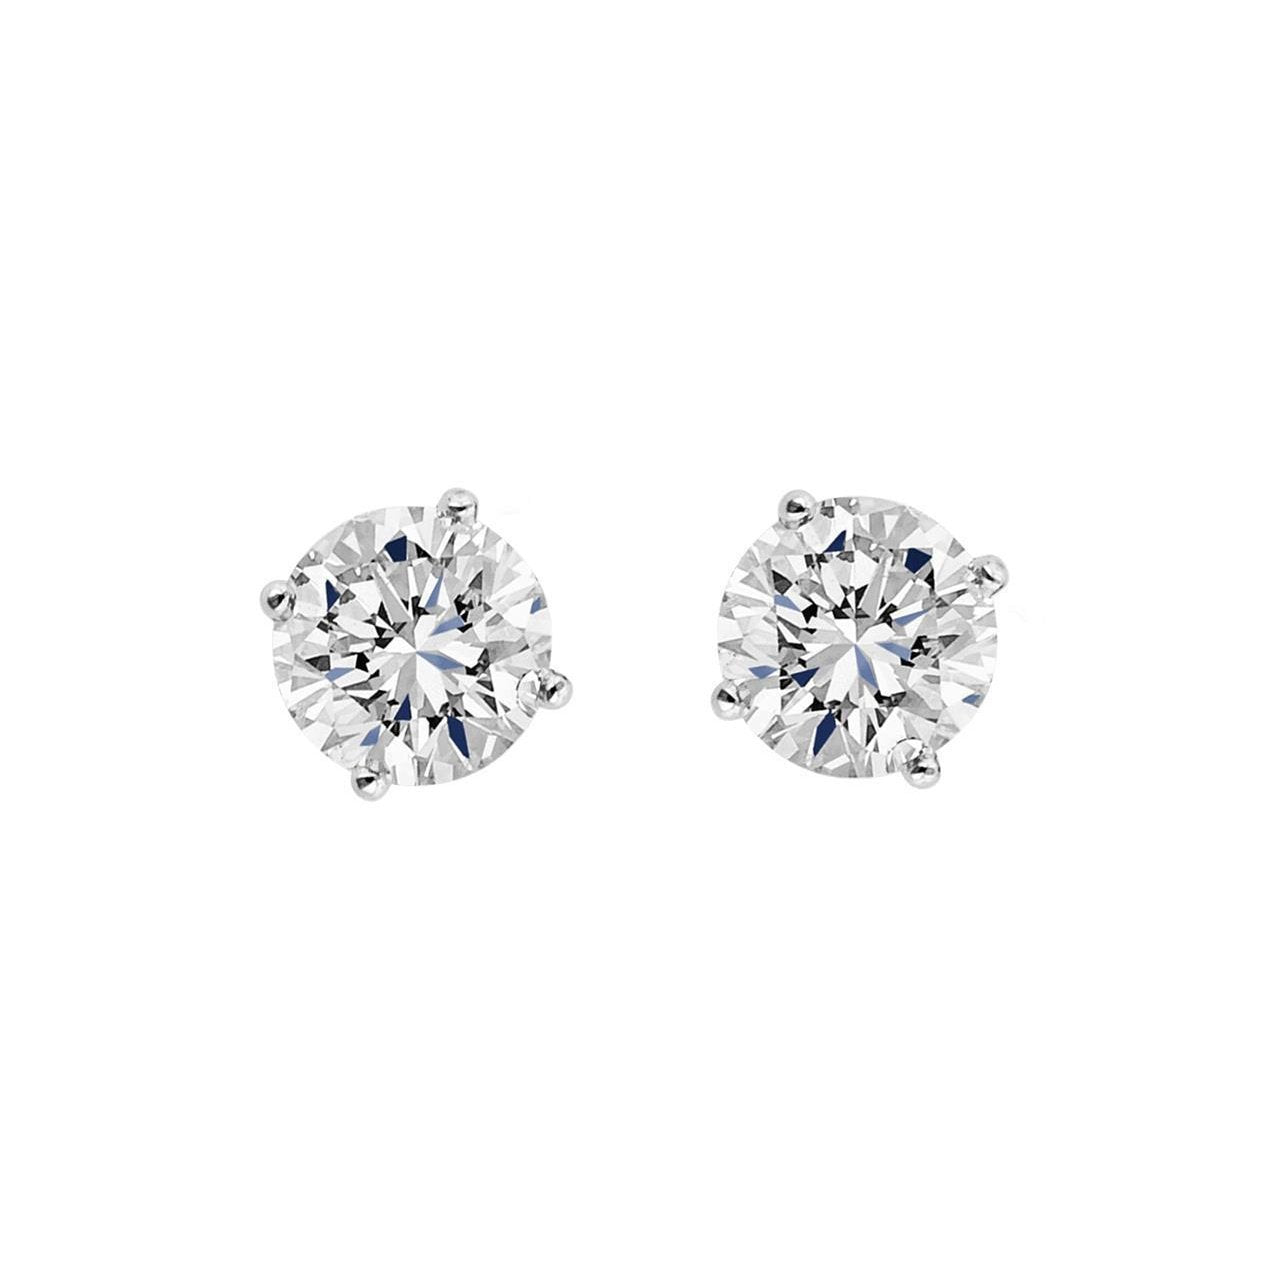 14K White Gold 2.00 Carats Genuine Diamonds Ladies Studs Earrings N